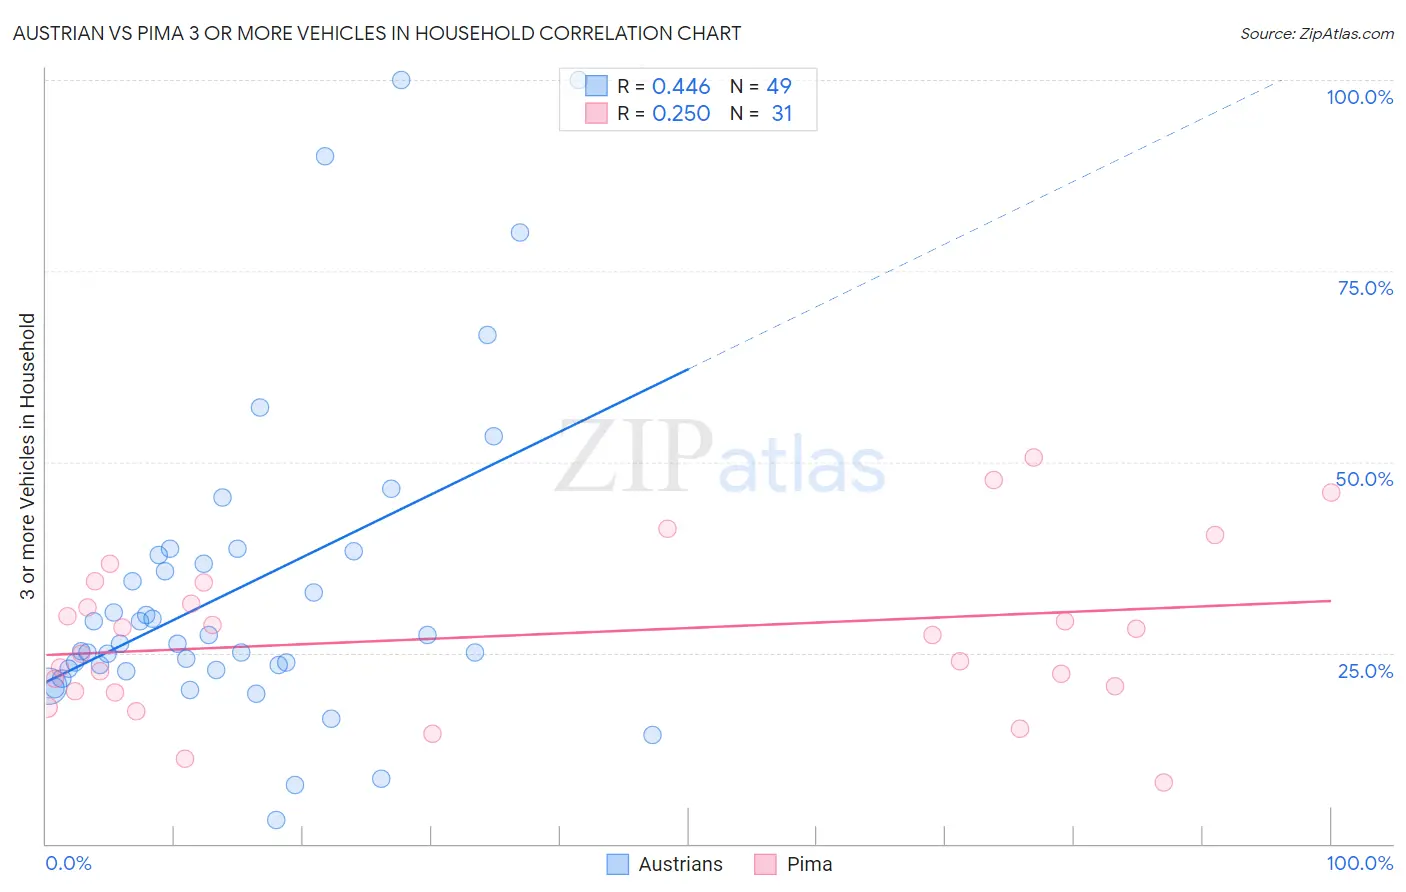 Austrian vs Pima 3 or more Vehicles in Household